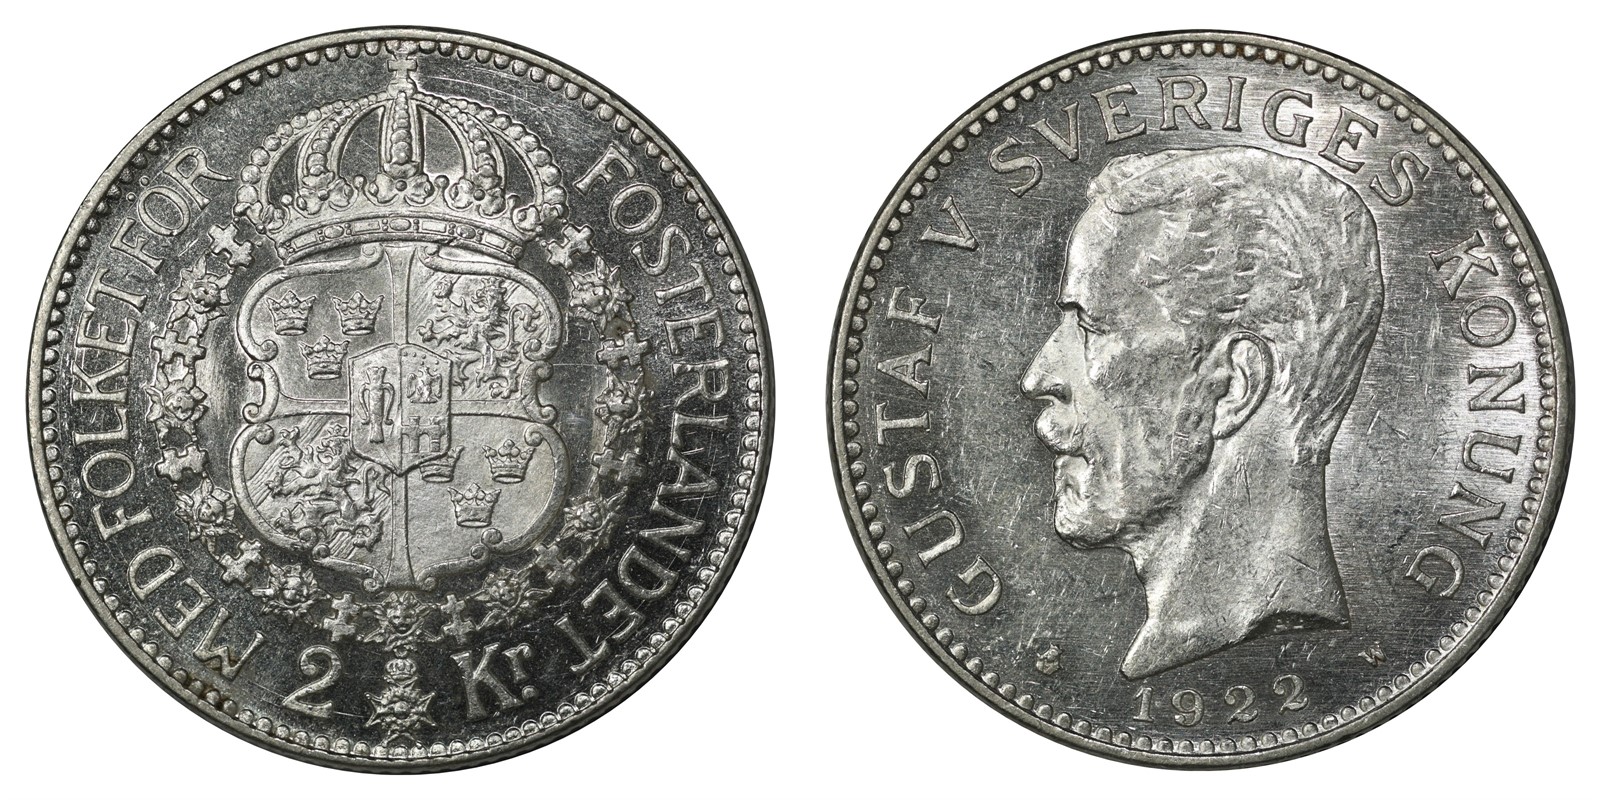 Sweden - Gustav V - 2 Kronor 1922 - UNC *